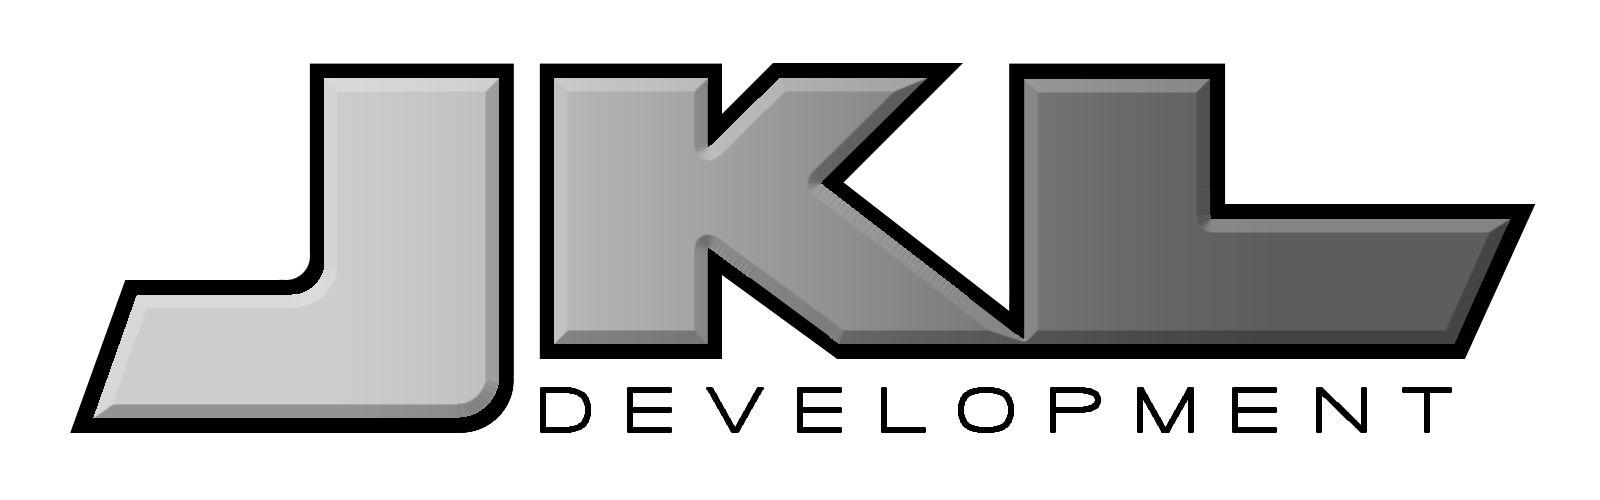 Jkl Logo - JKL Development Inc. Vegas, NV